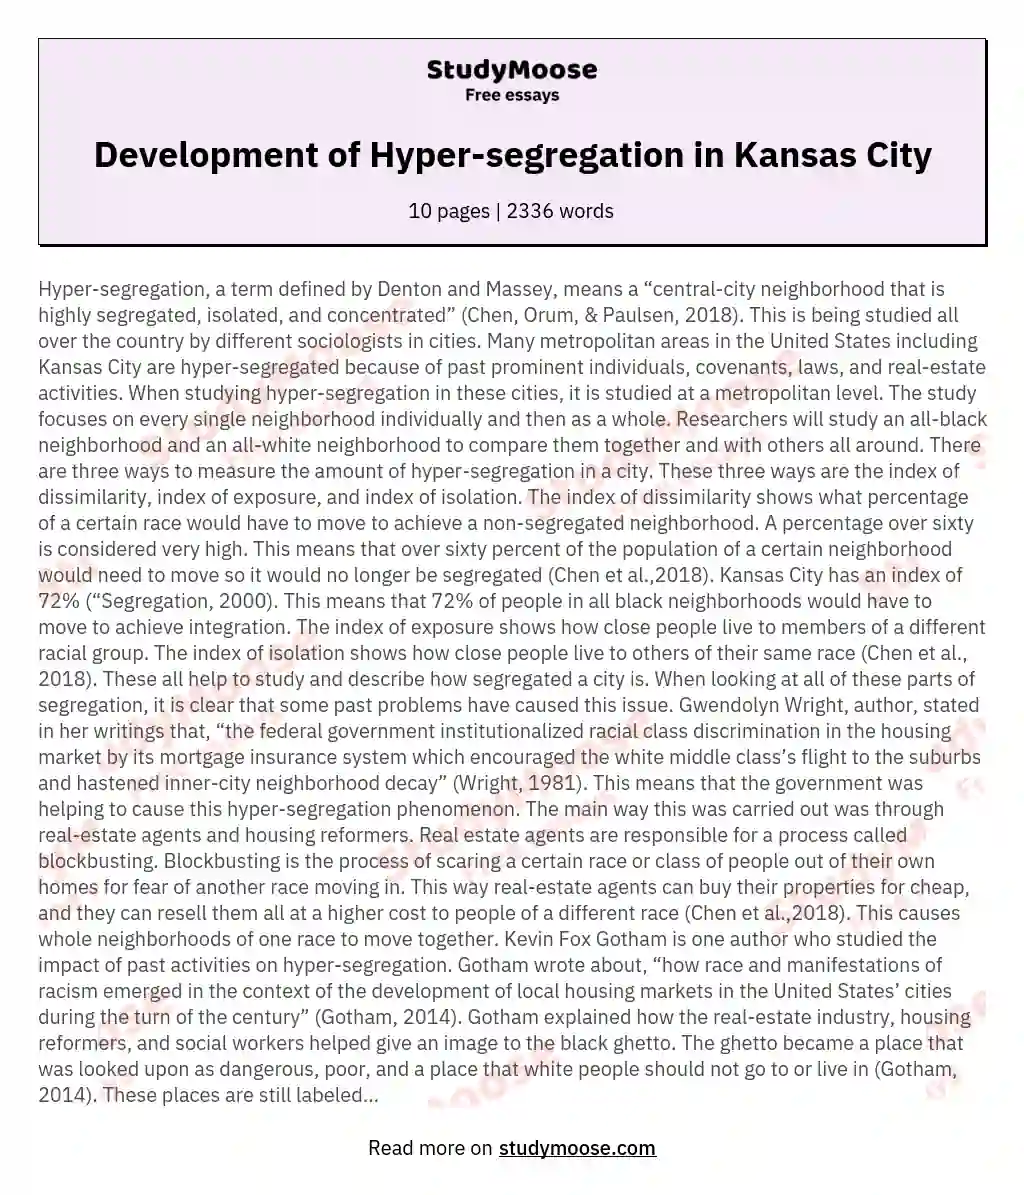 Development of Hyper-segregation in Kansas City essay